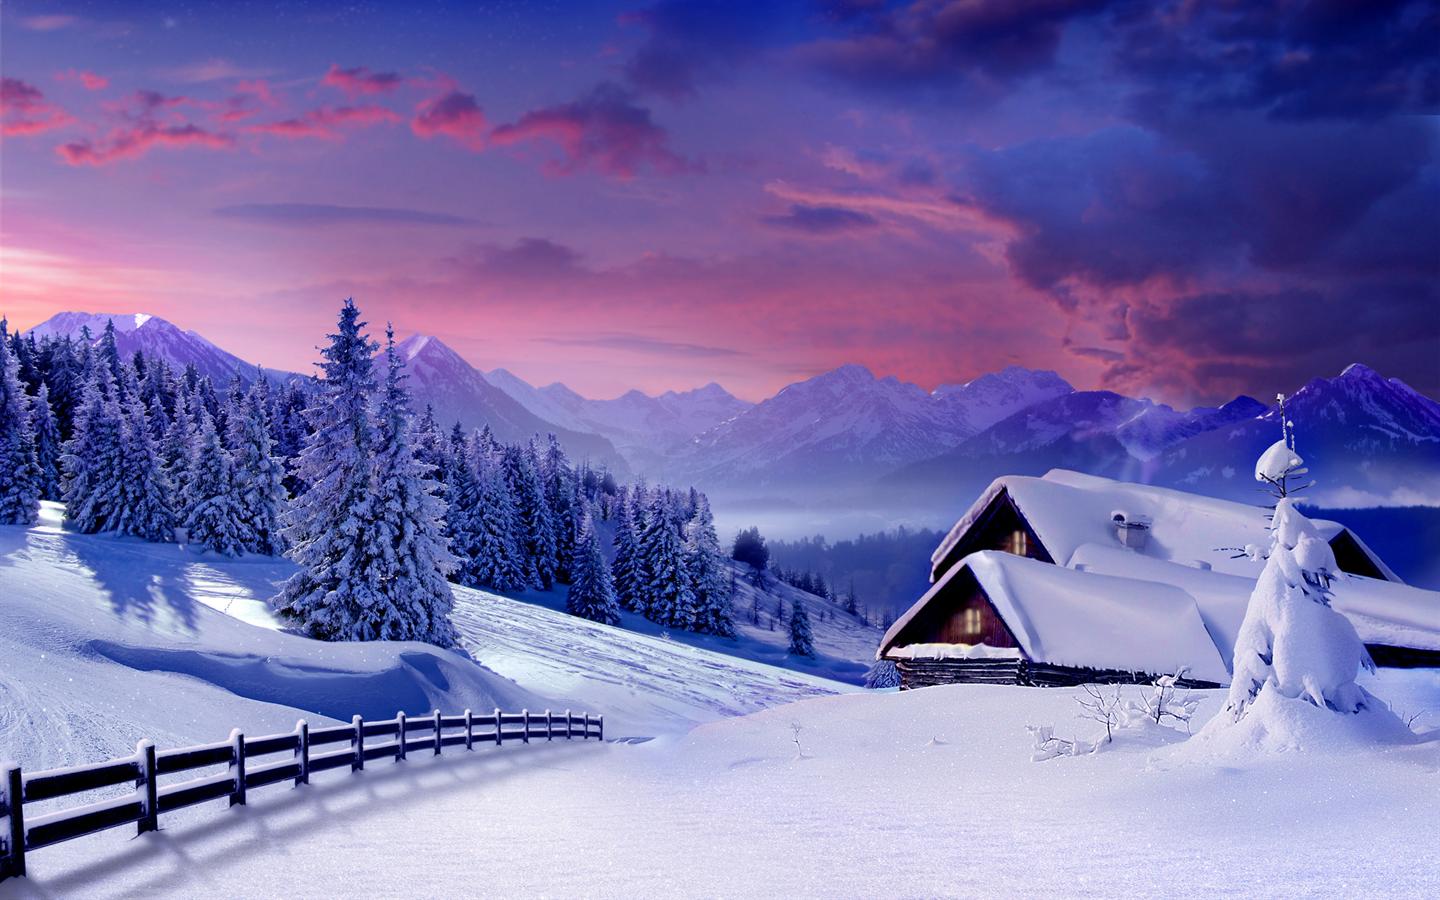  Winter in the mountains Desktop Wallpaper Background Desktop Wallpaper